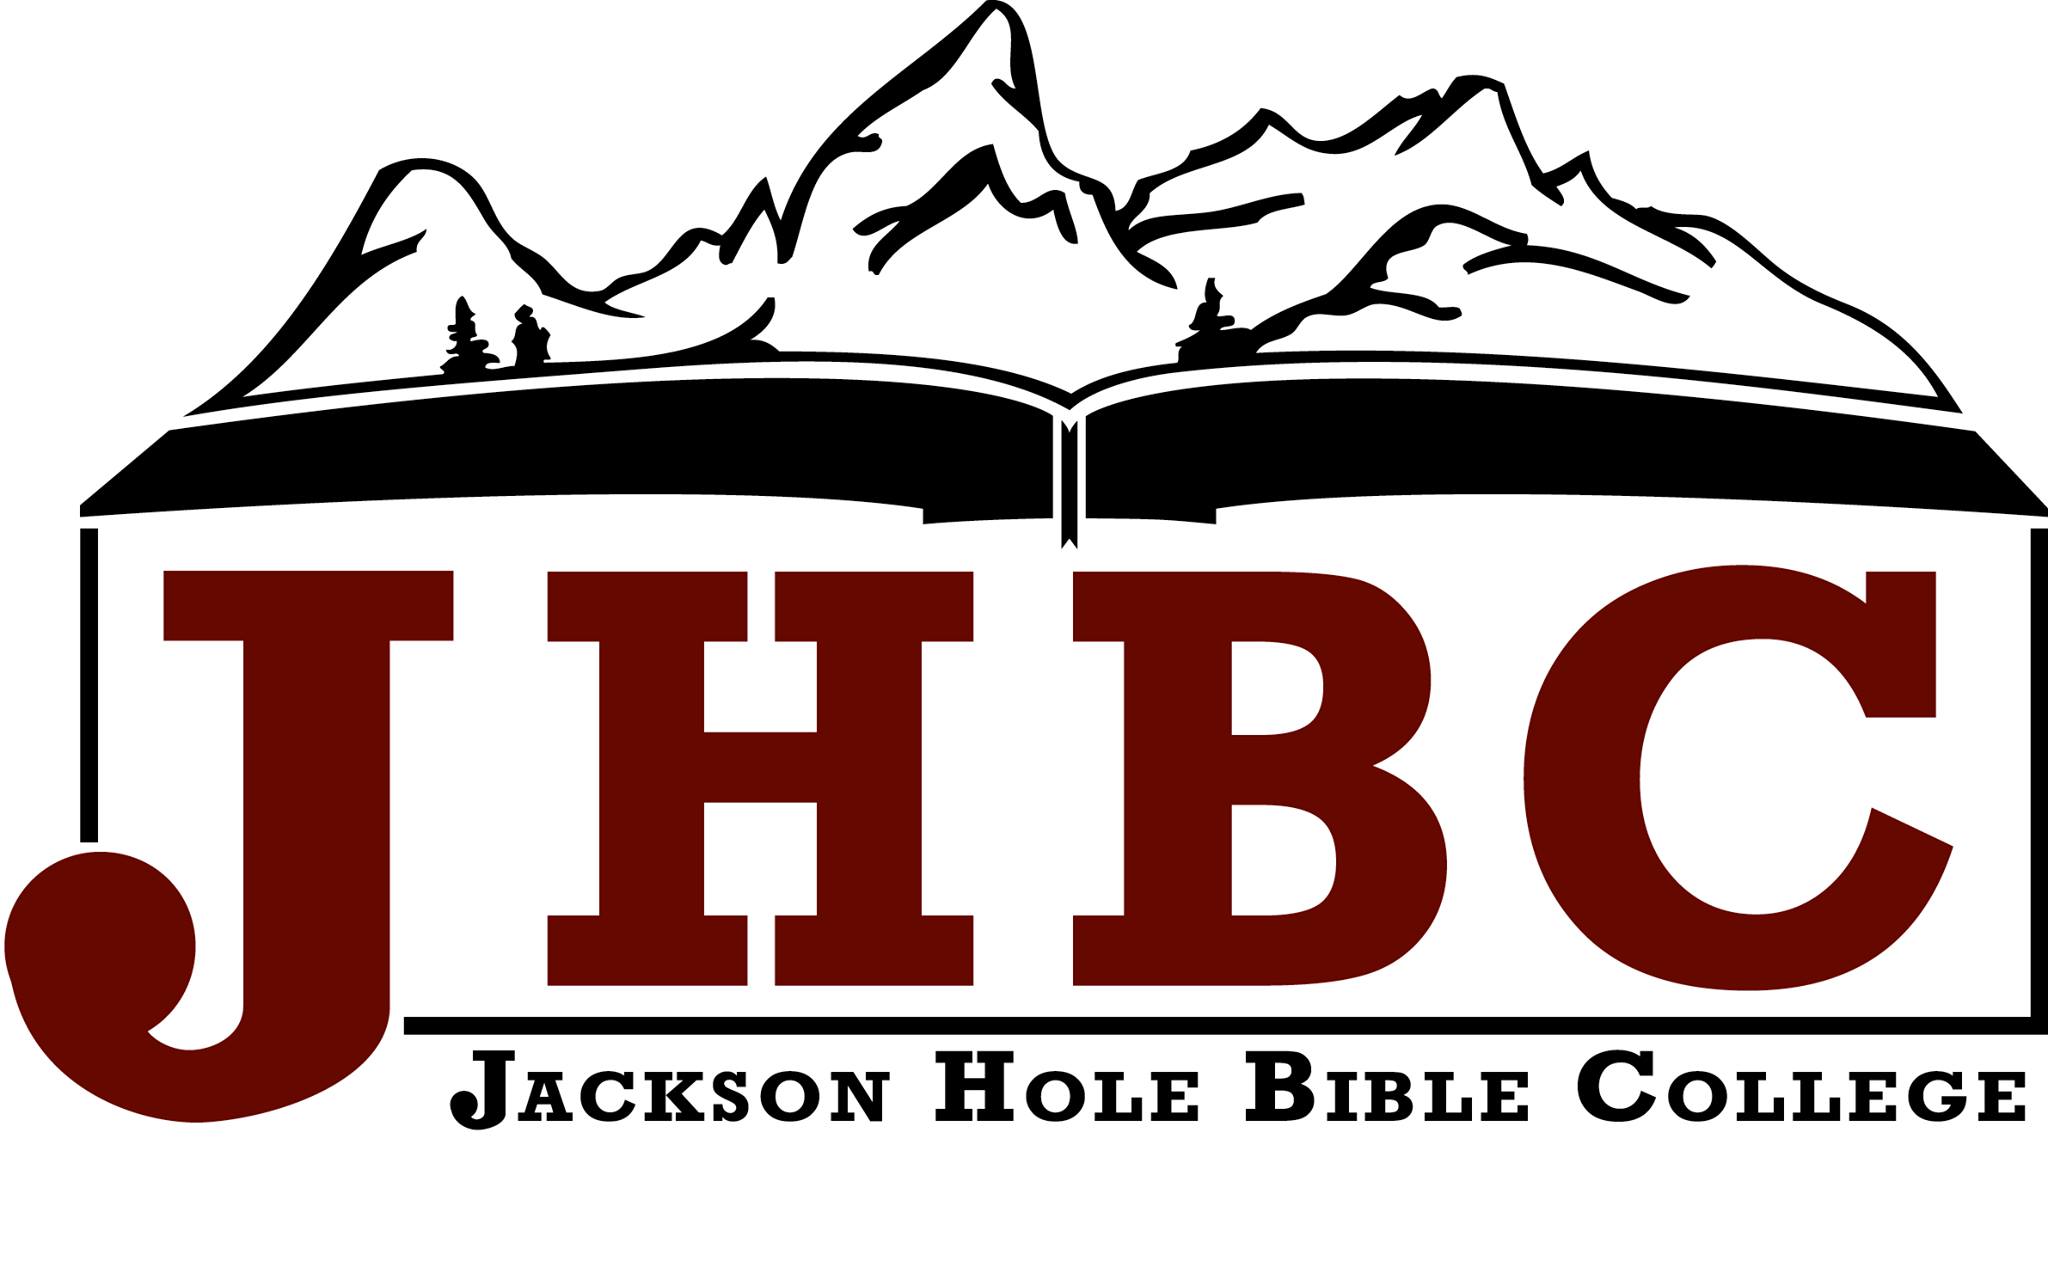 Jackson Hole Bible College